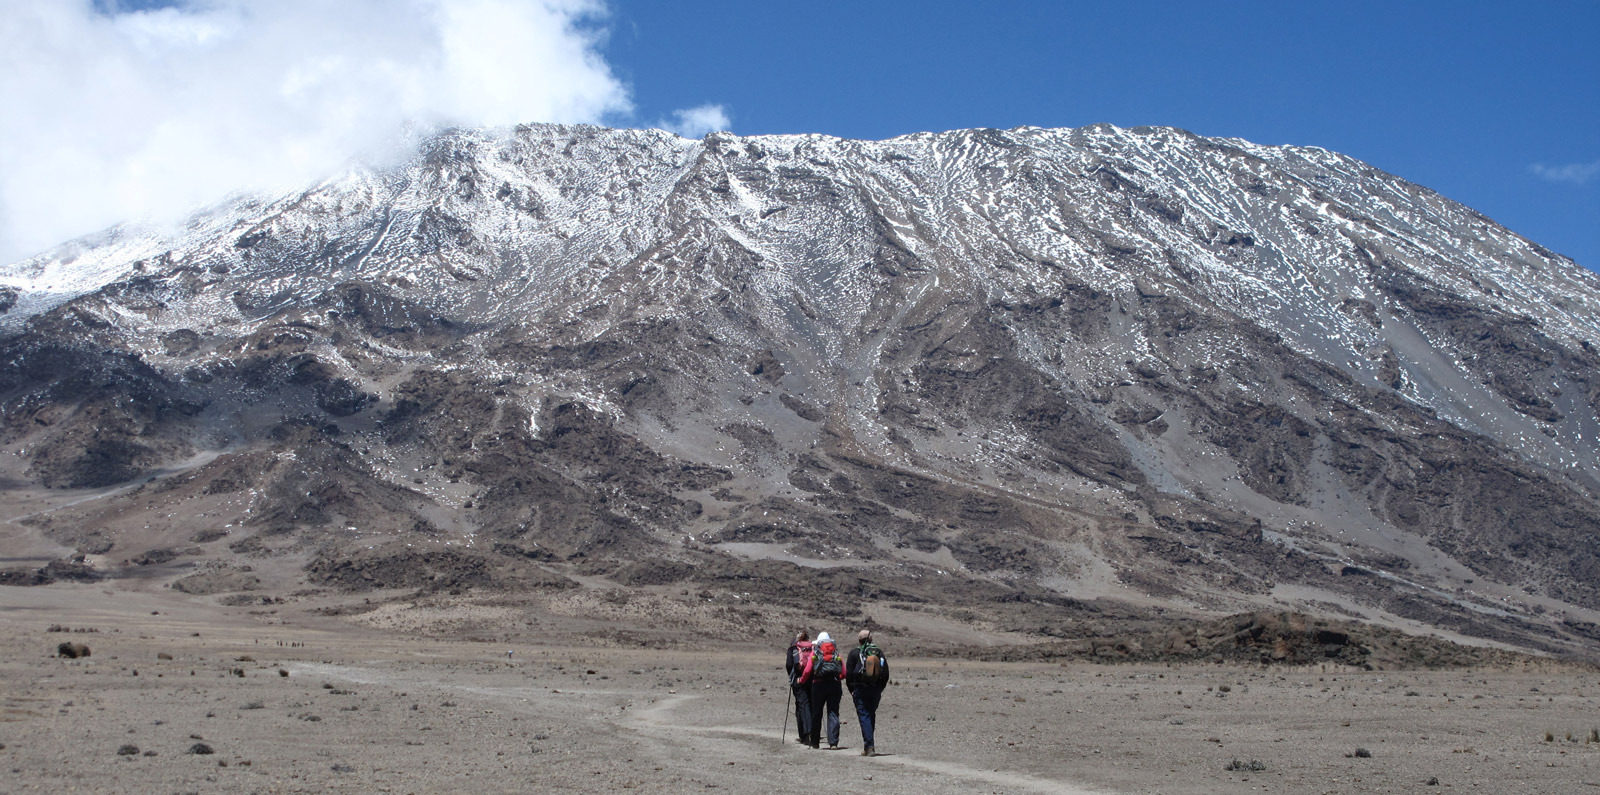 Mount Kilimanjaro with climbers